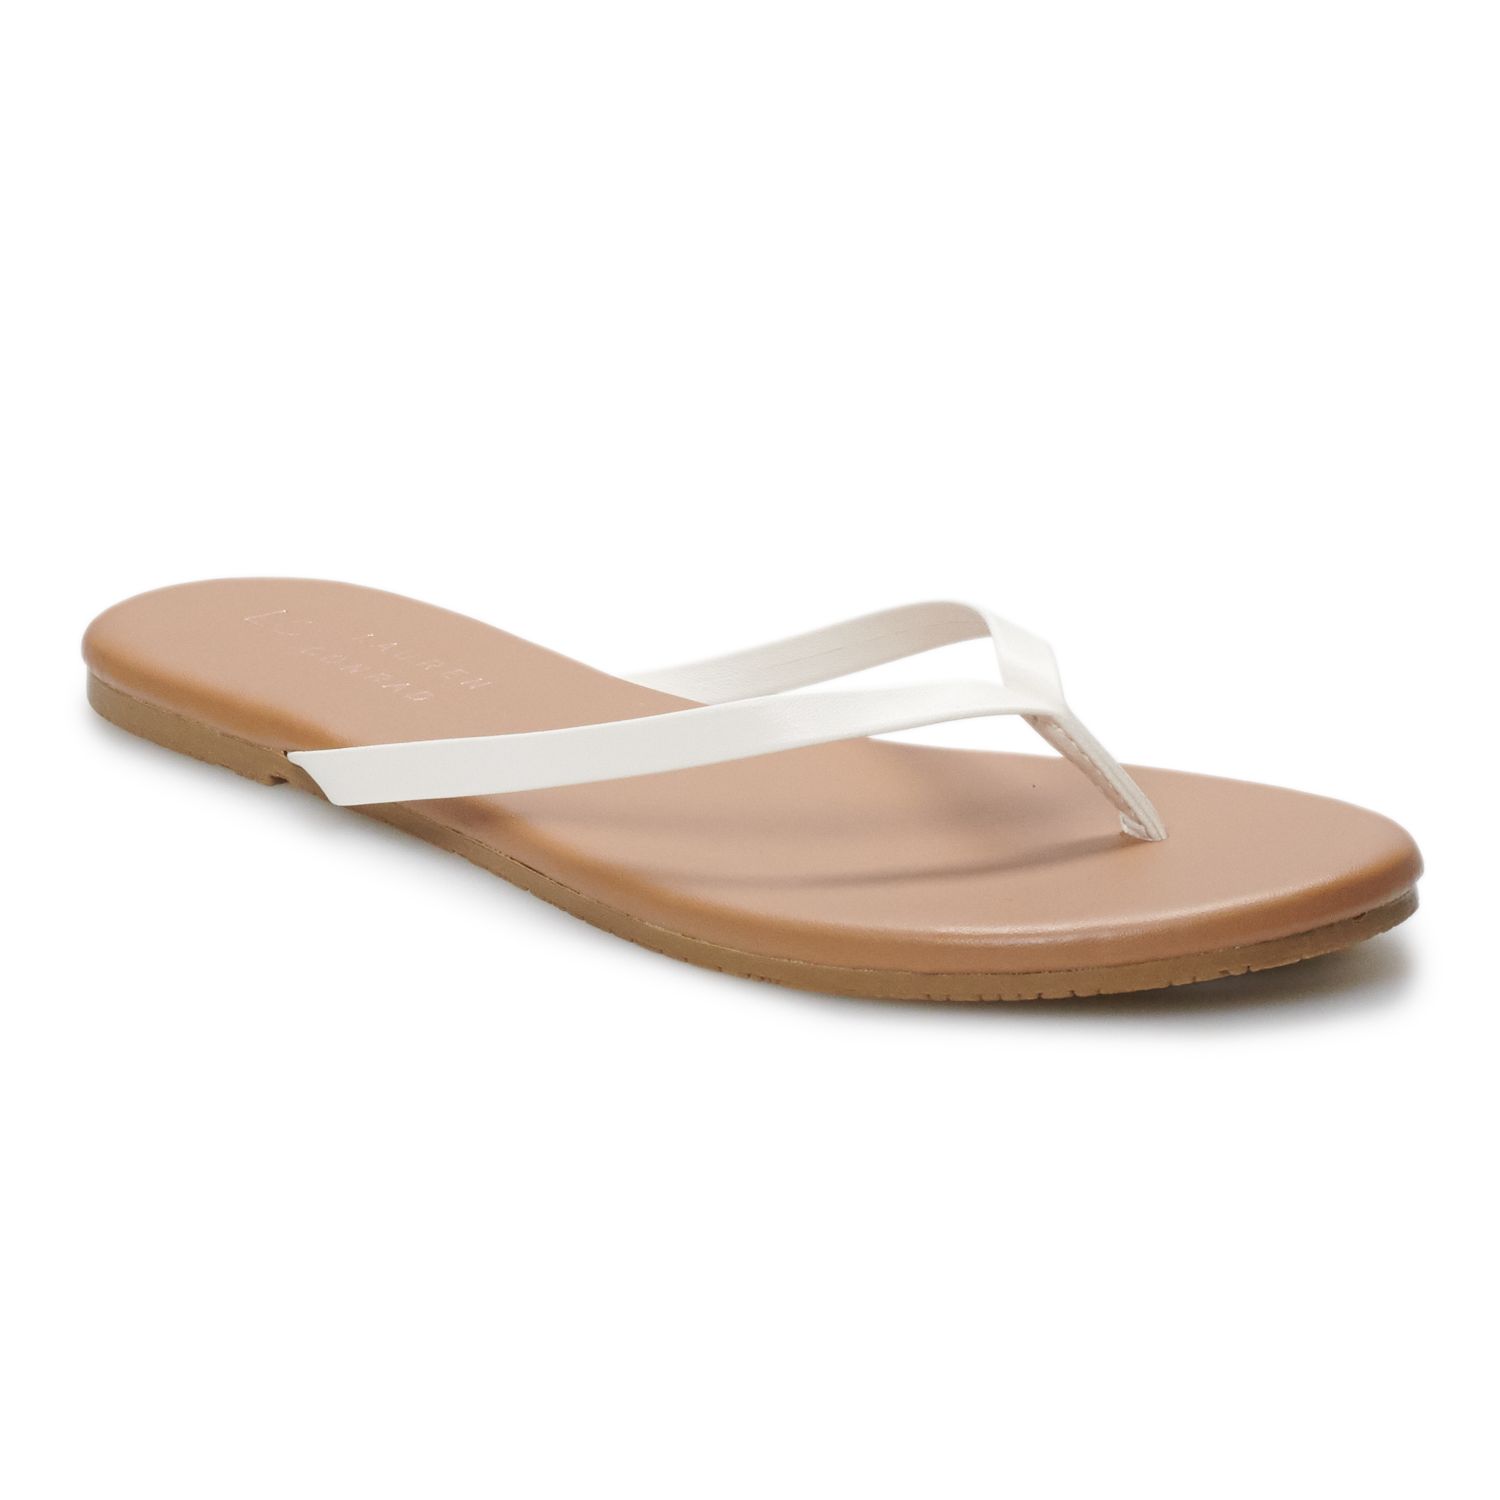 Womens White Flip Flops Sandals - Shoes 